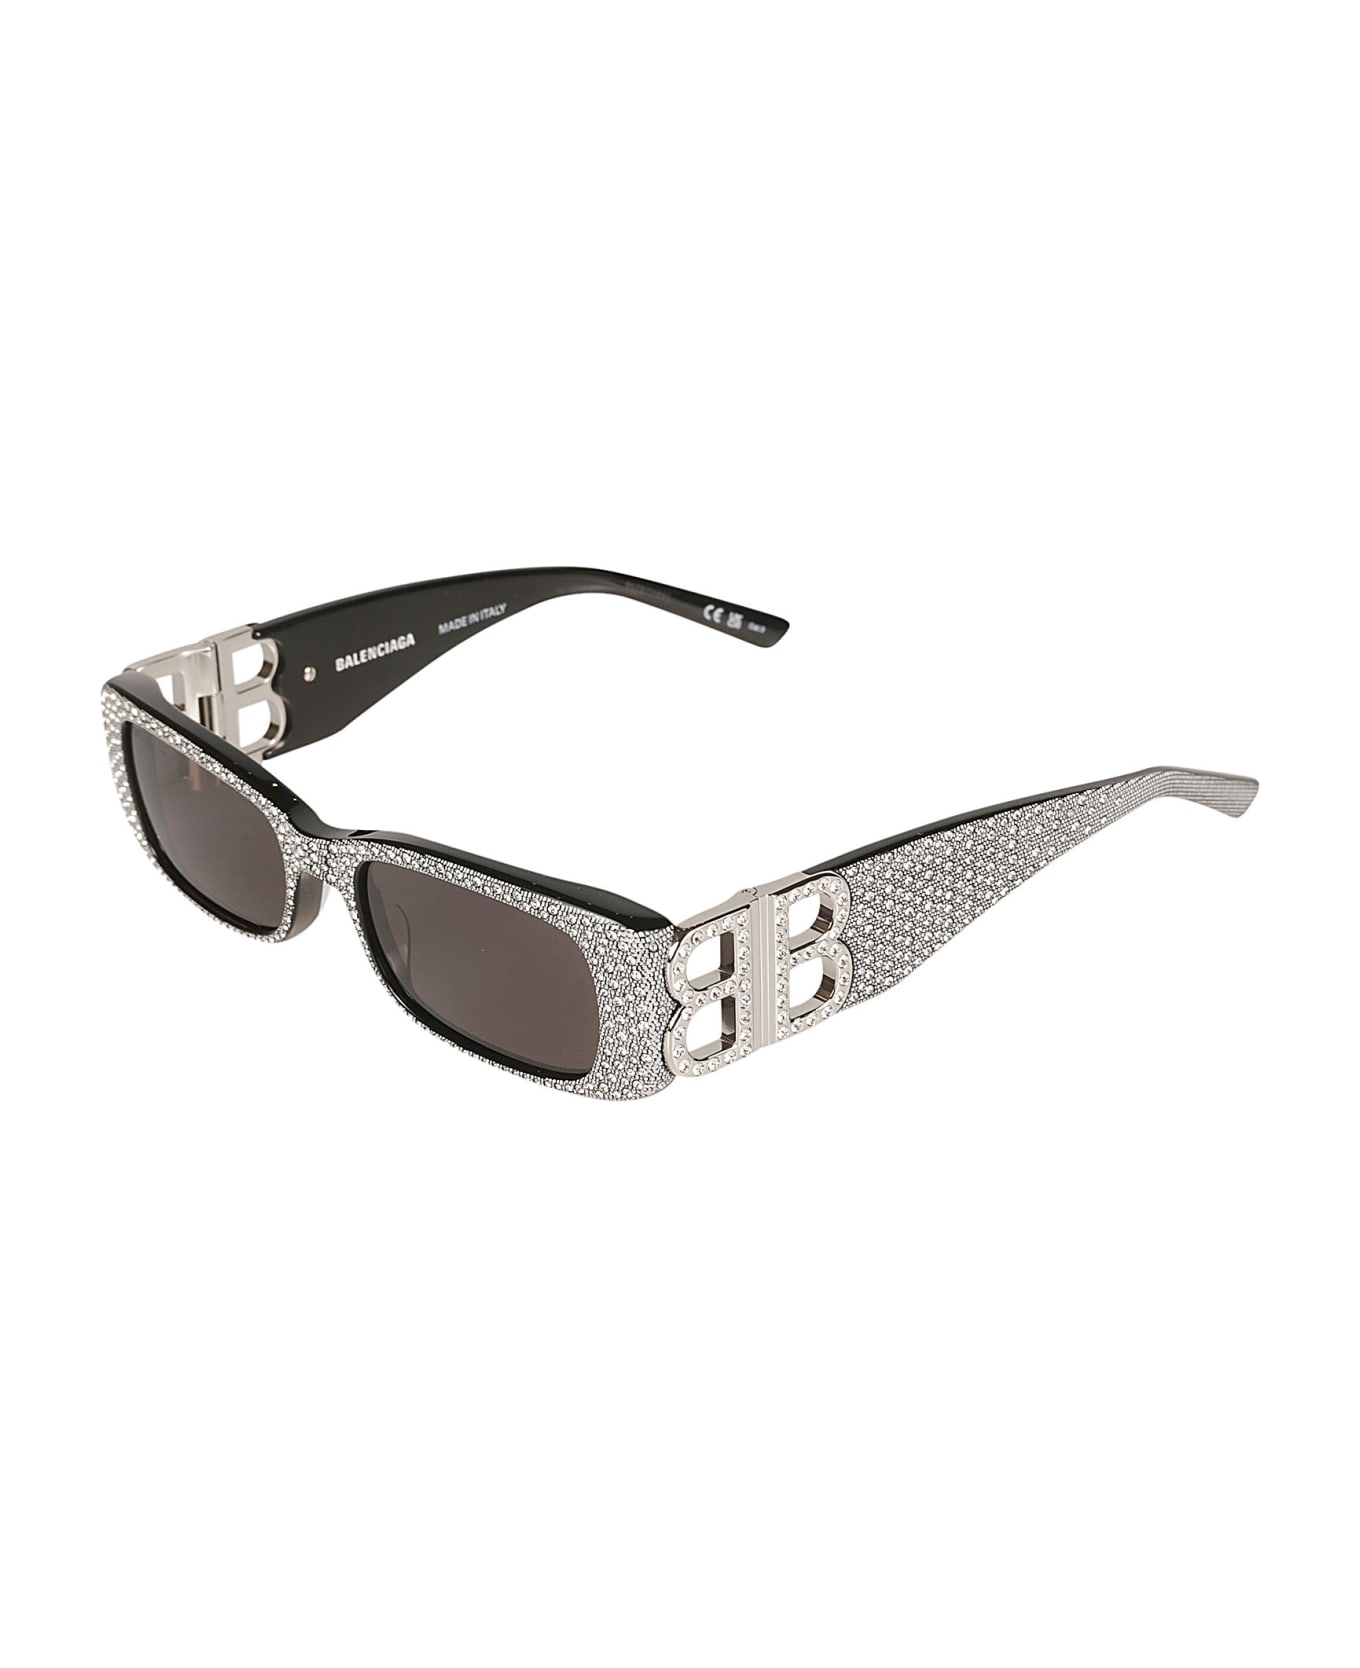 Balenciaga Eyewear Crystal Embellished Rectangular Frame Sunglasses pilot-frame - Black/Silver/Grey